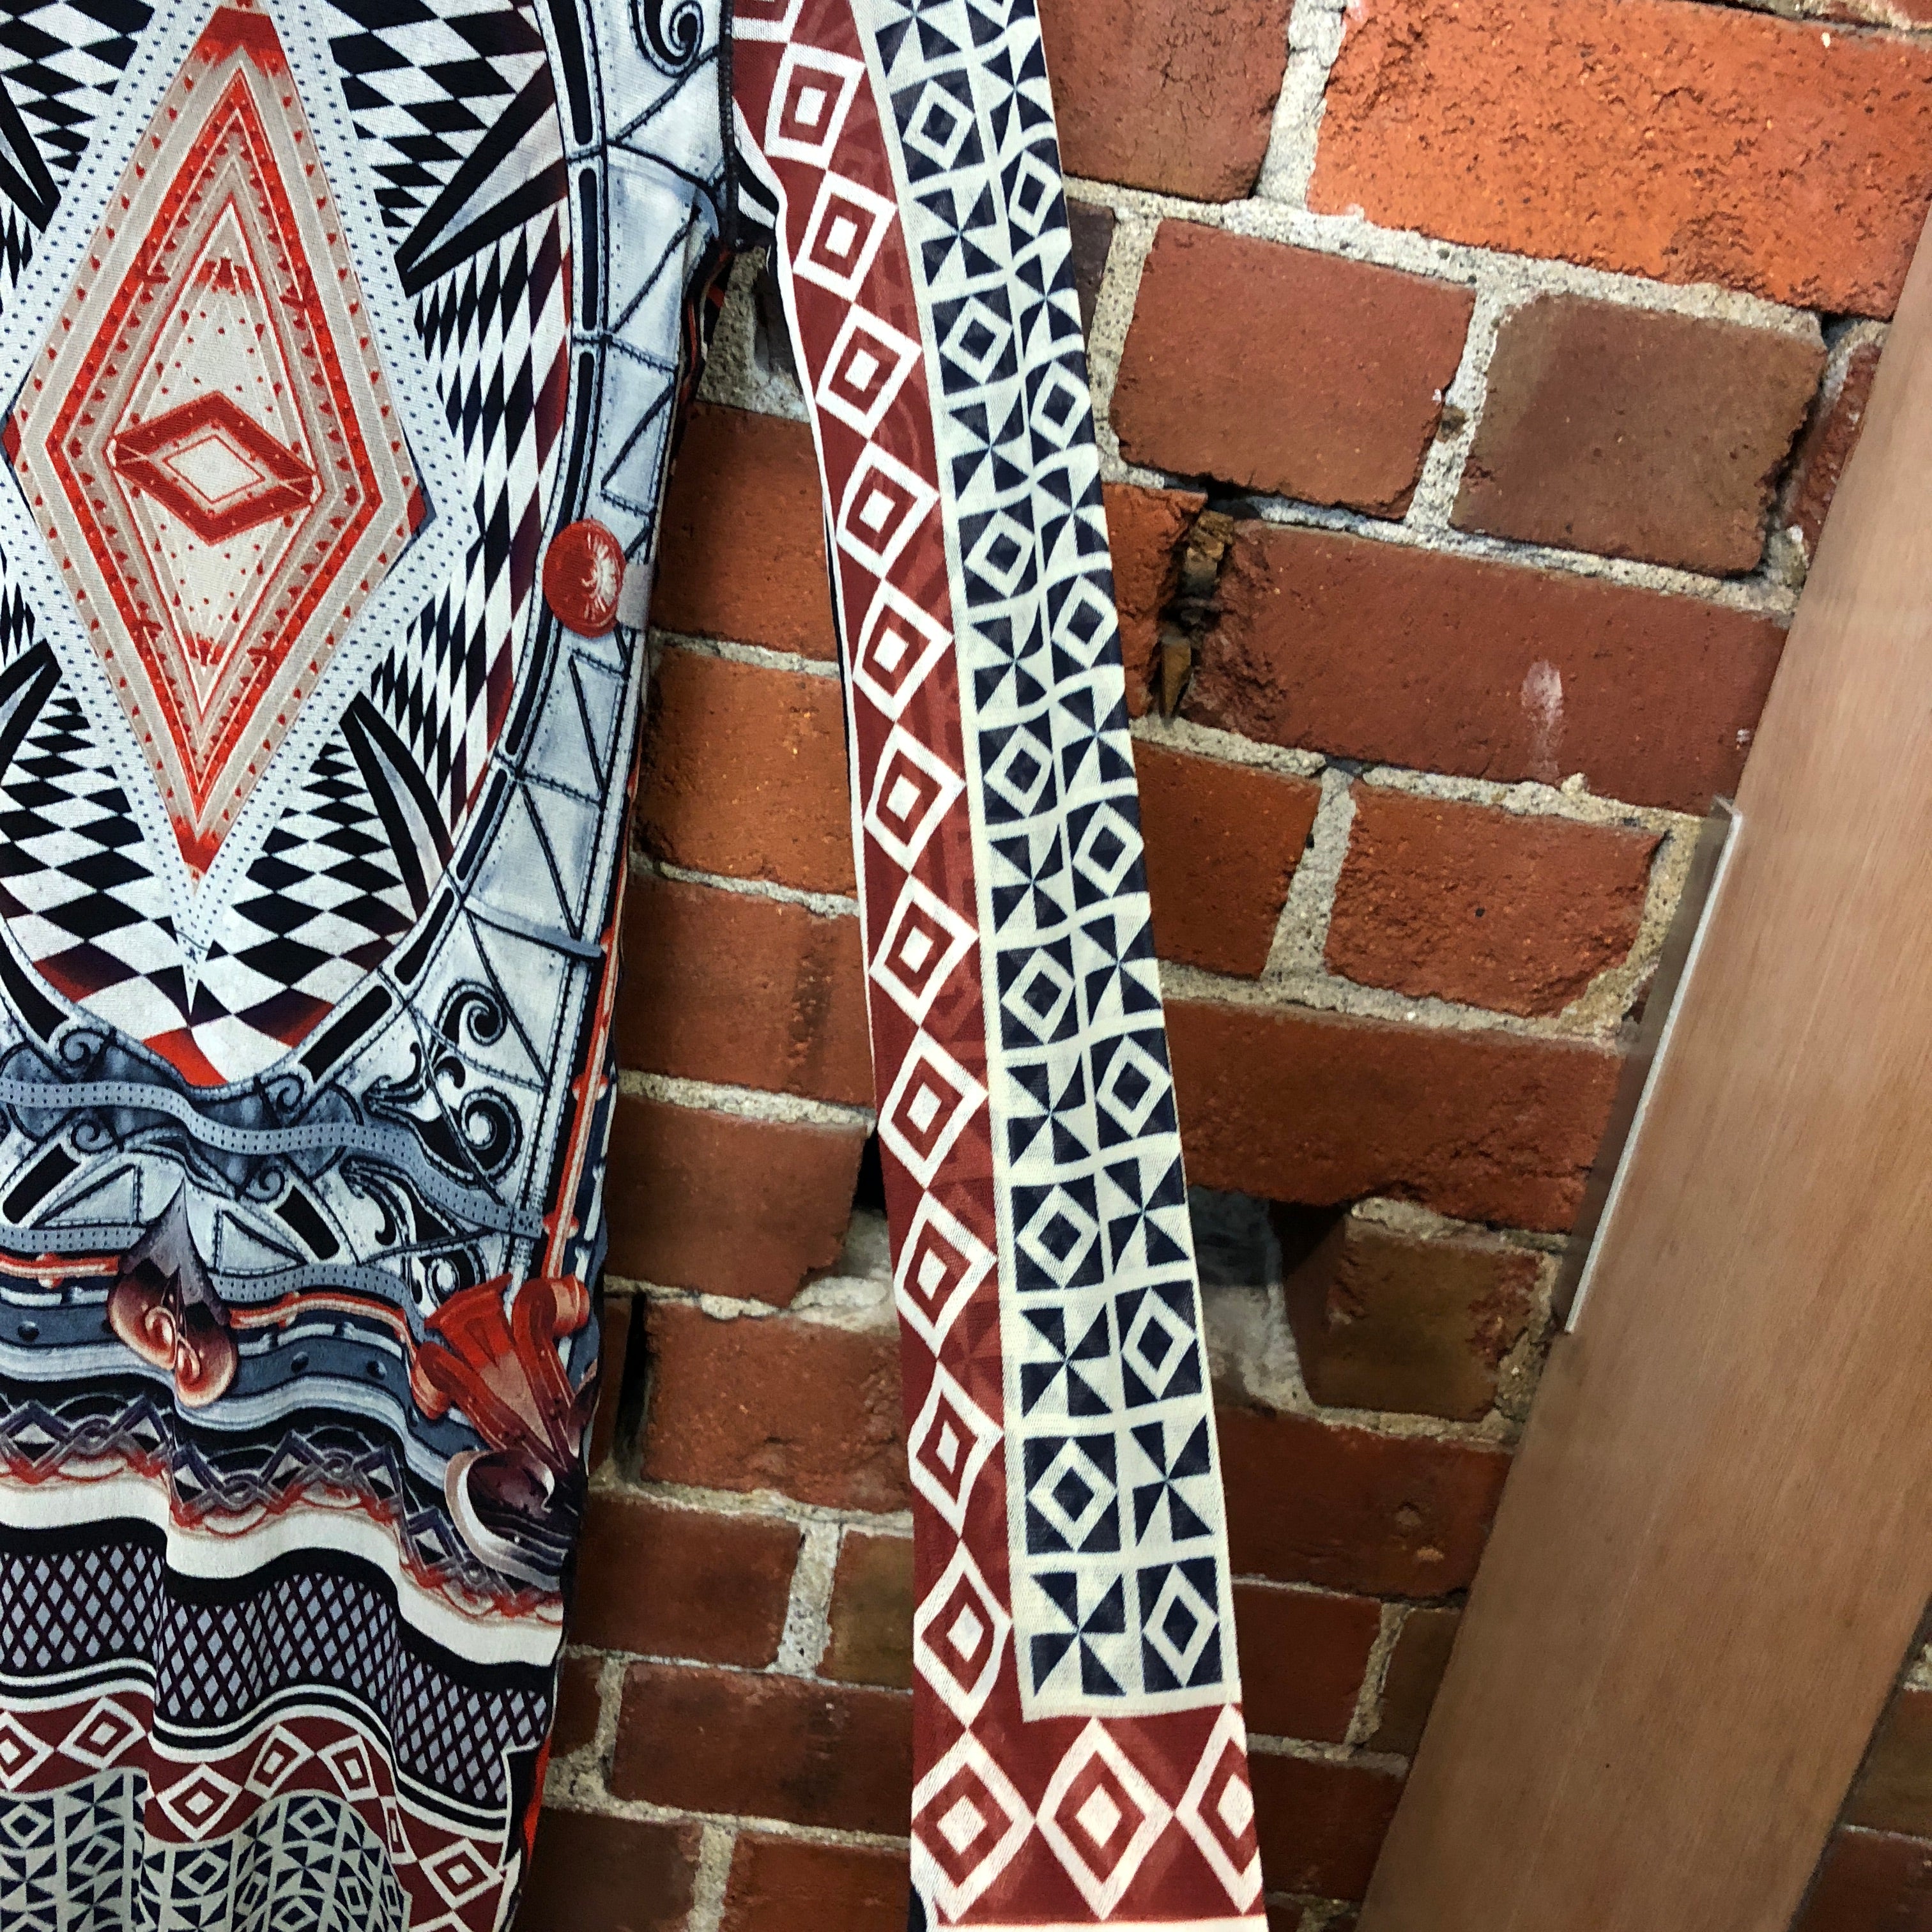 GAULTIER amazing patterned mesh dress